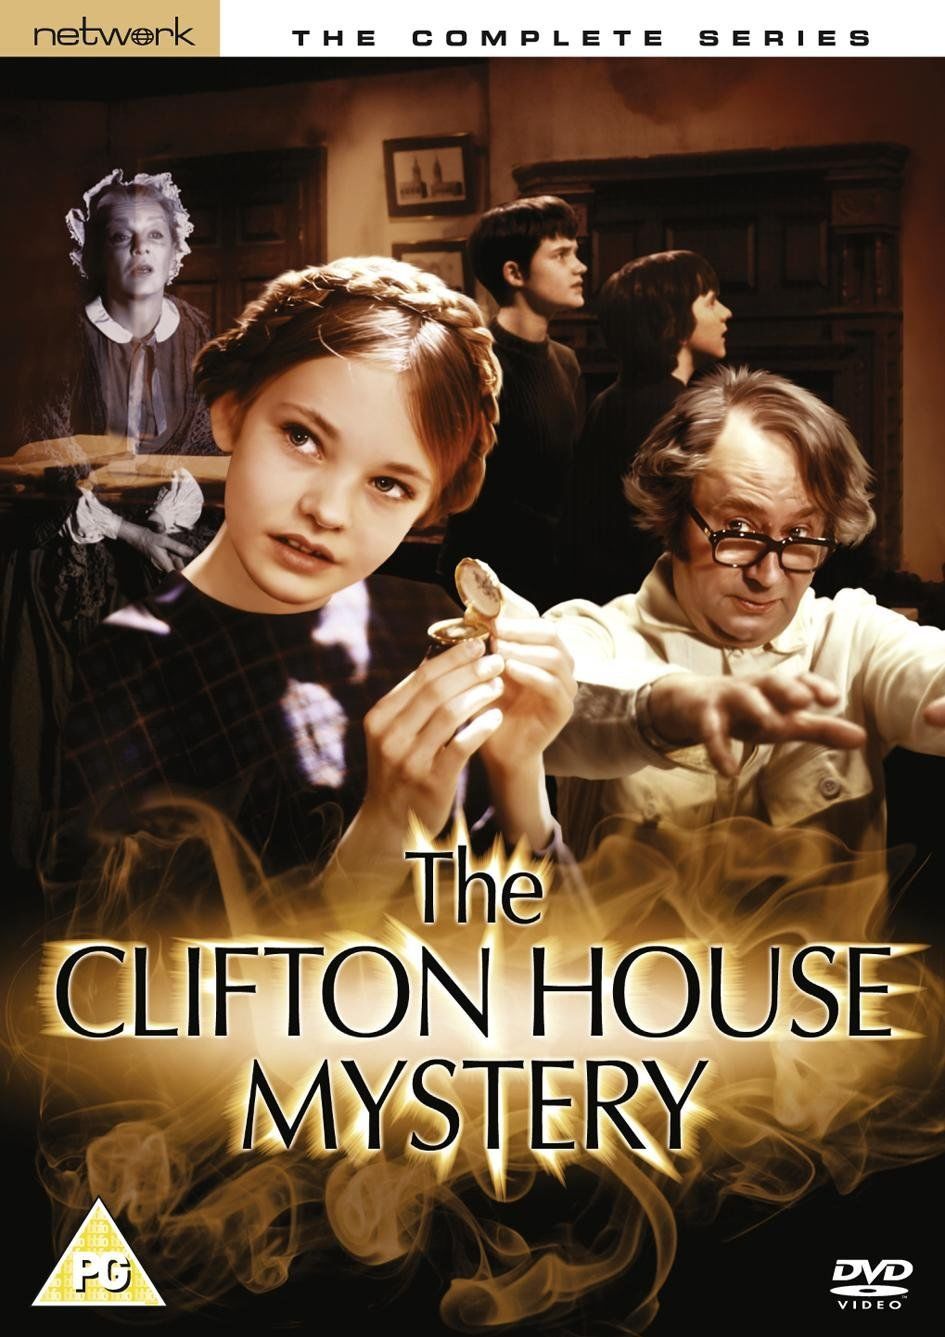 The Clifton House Mystery ne zaman